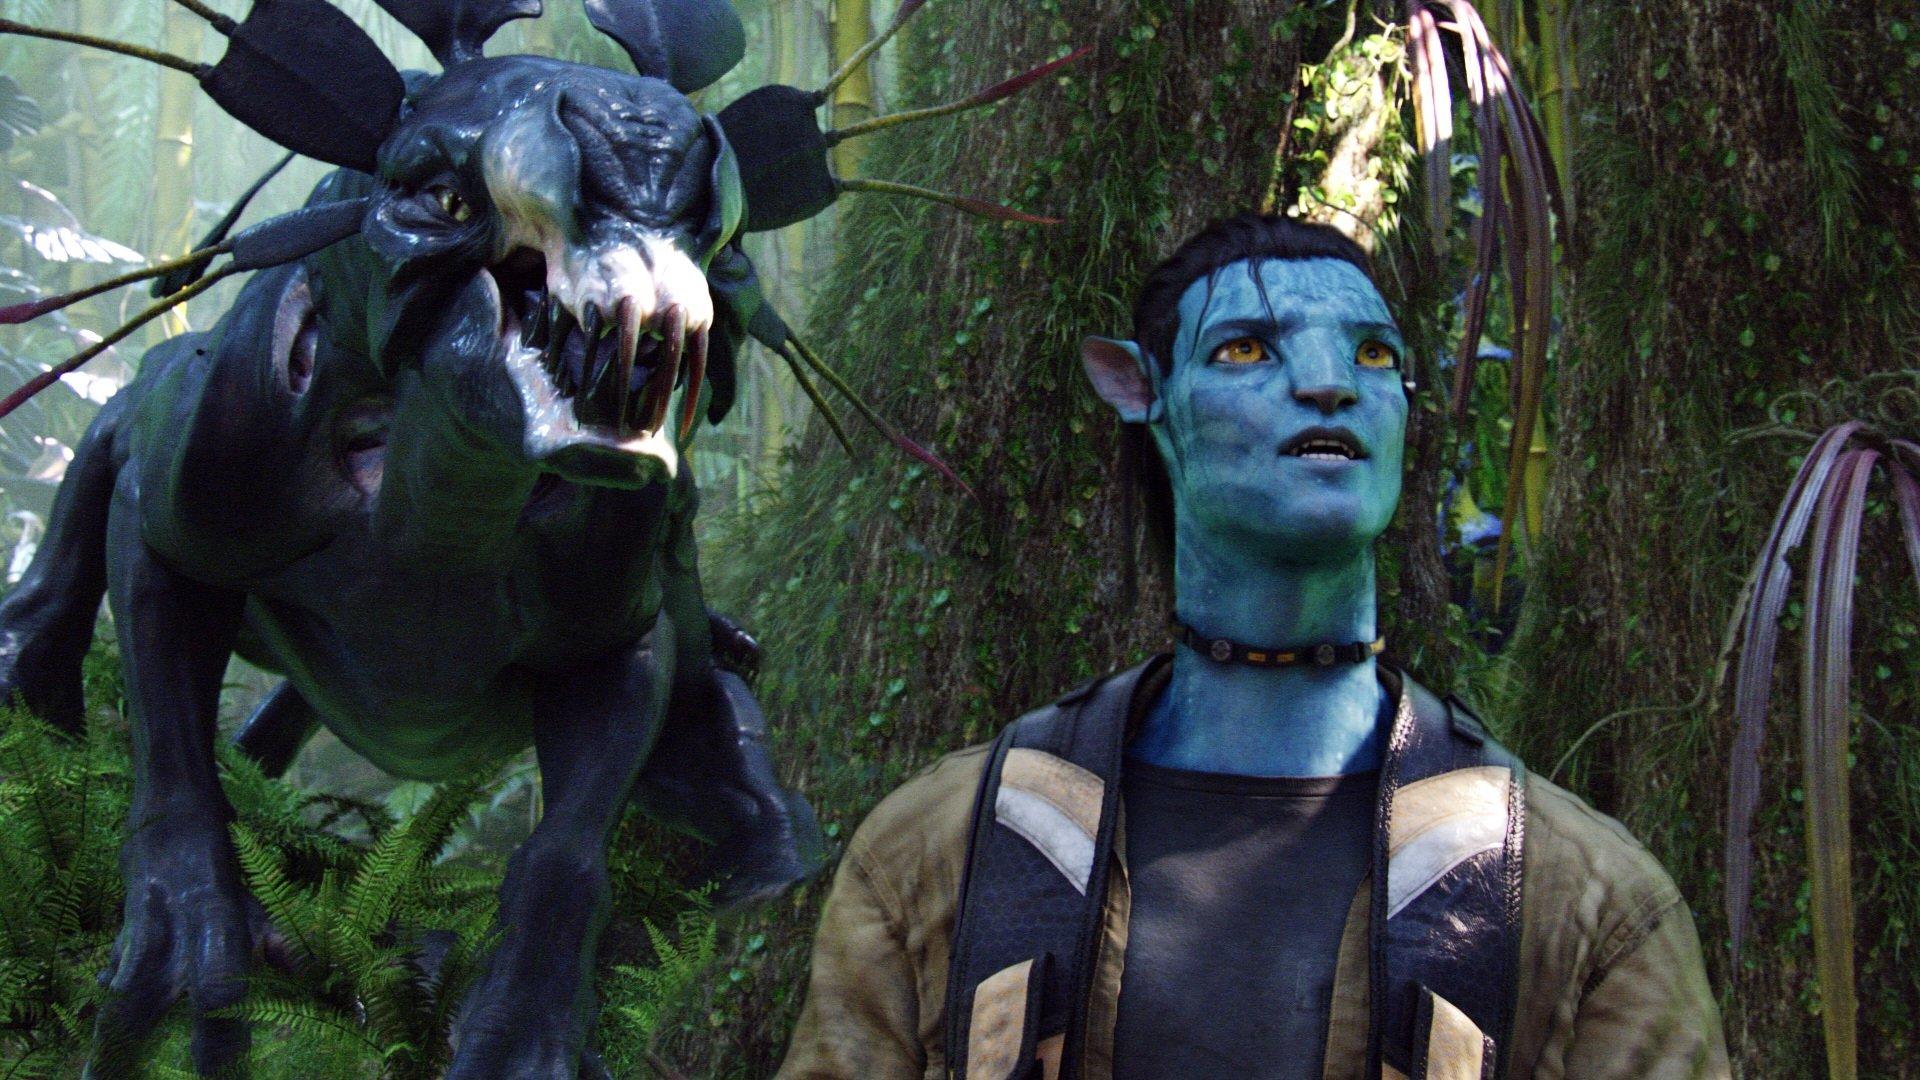 Sam Worthington As Jake Sully Avatar Wallpapers